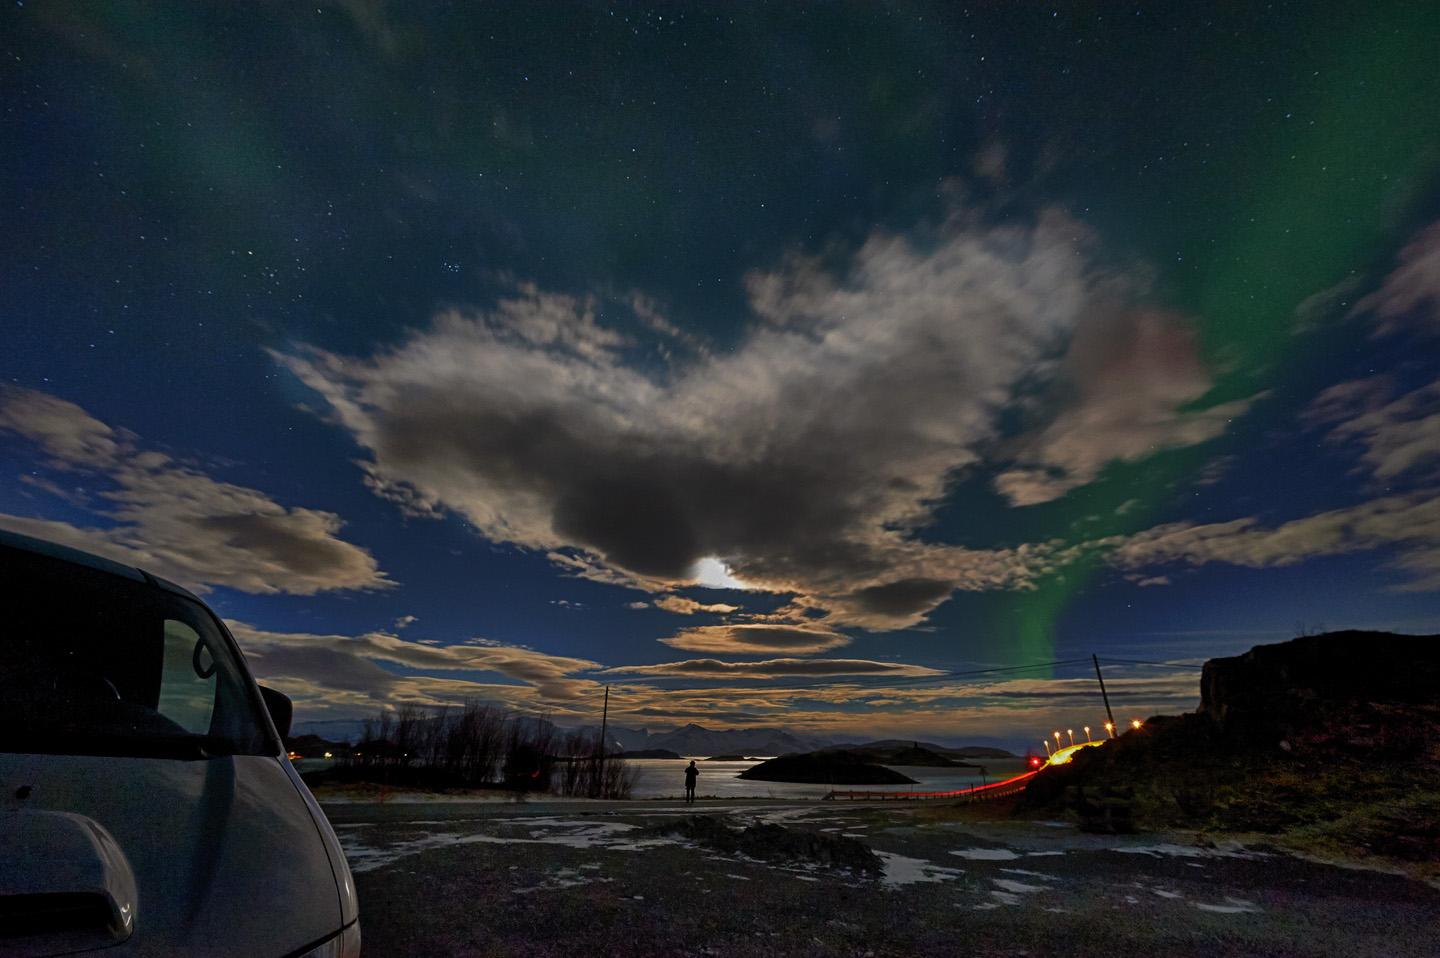 A Photographer's Encounter Underneath the Aurora Borealis